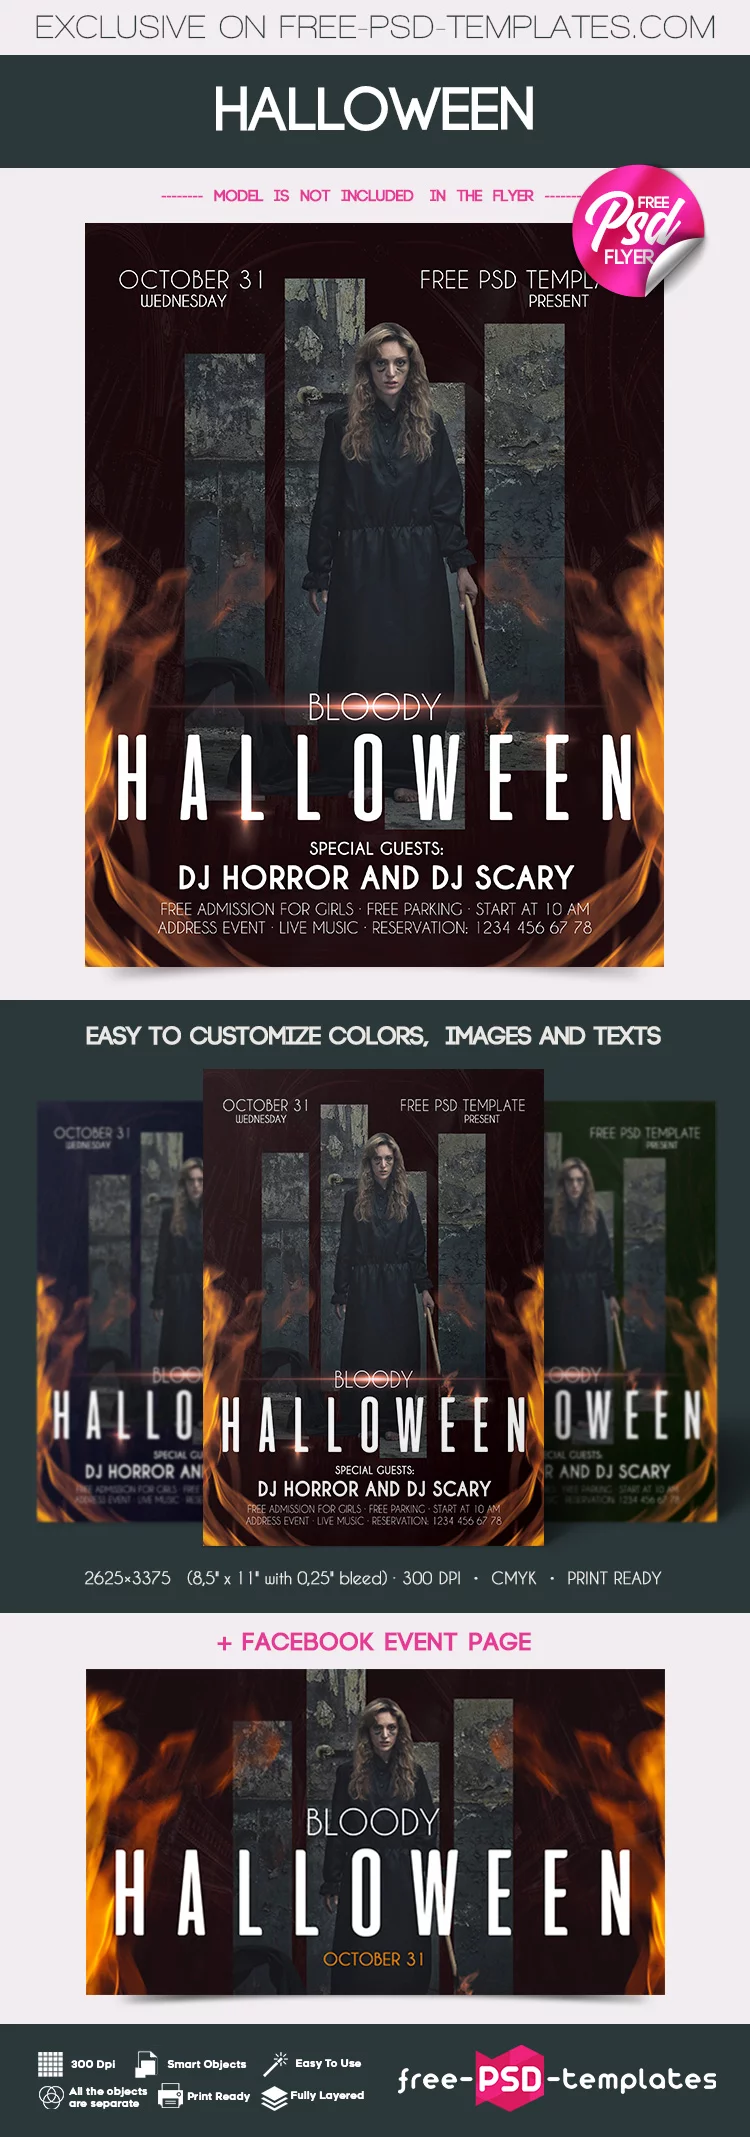 Free Halloween Flyer in PSD